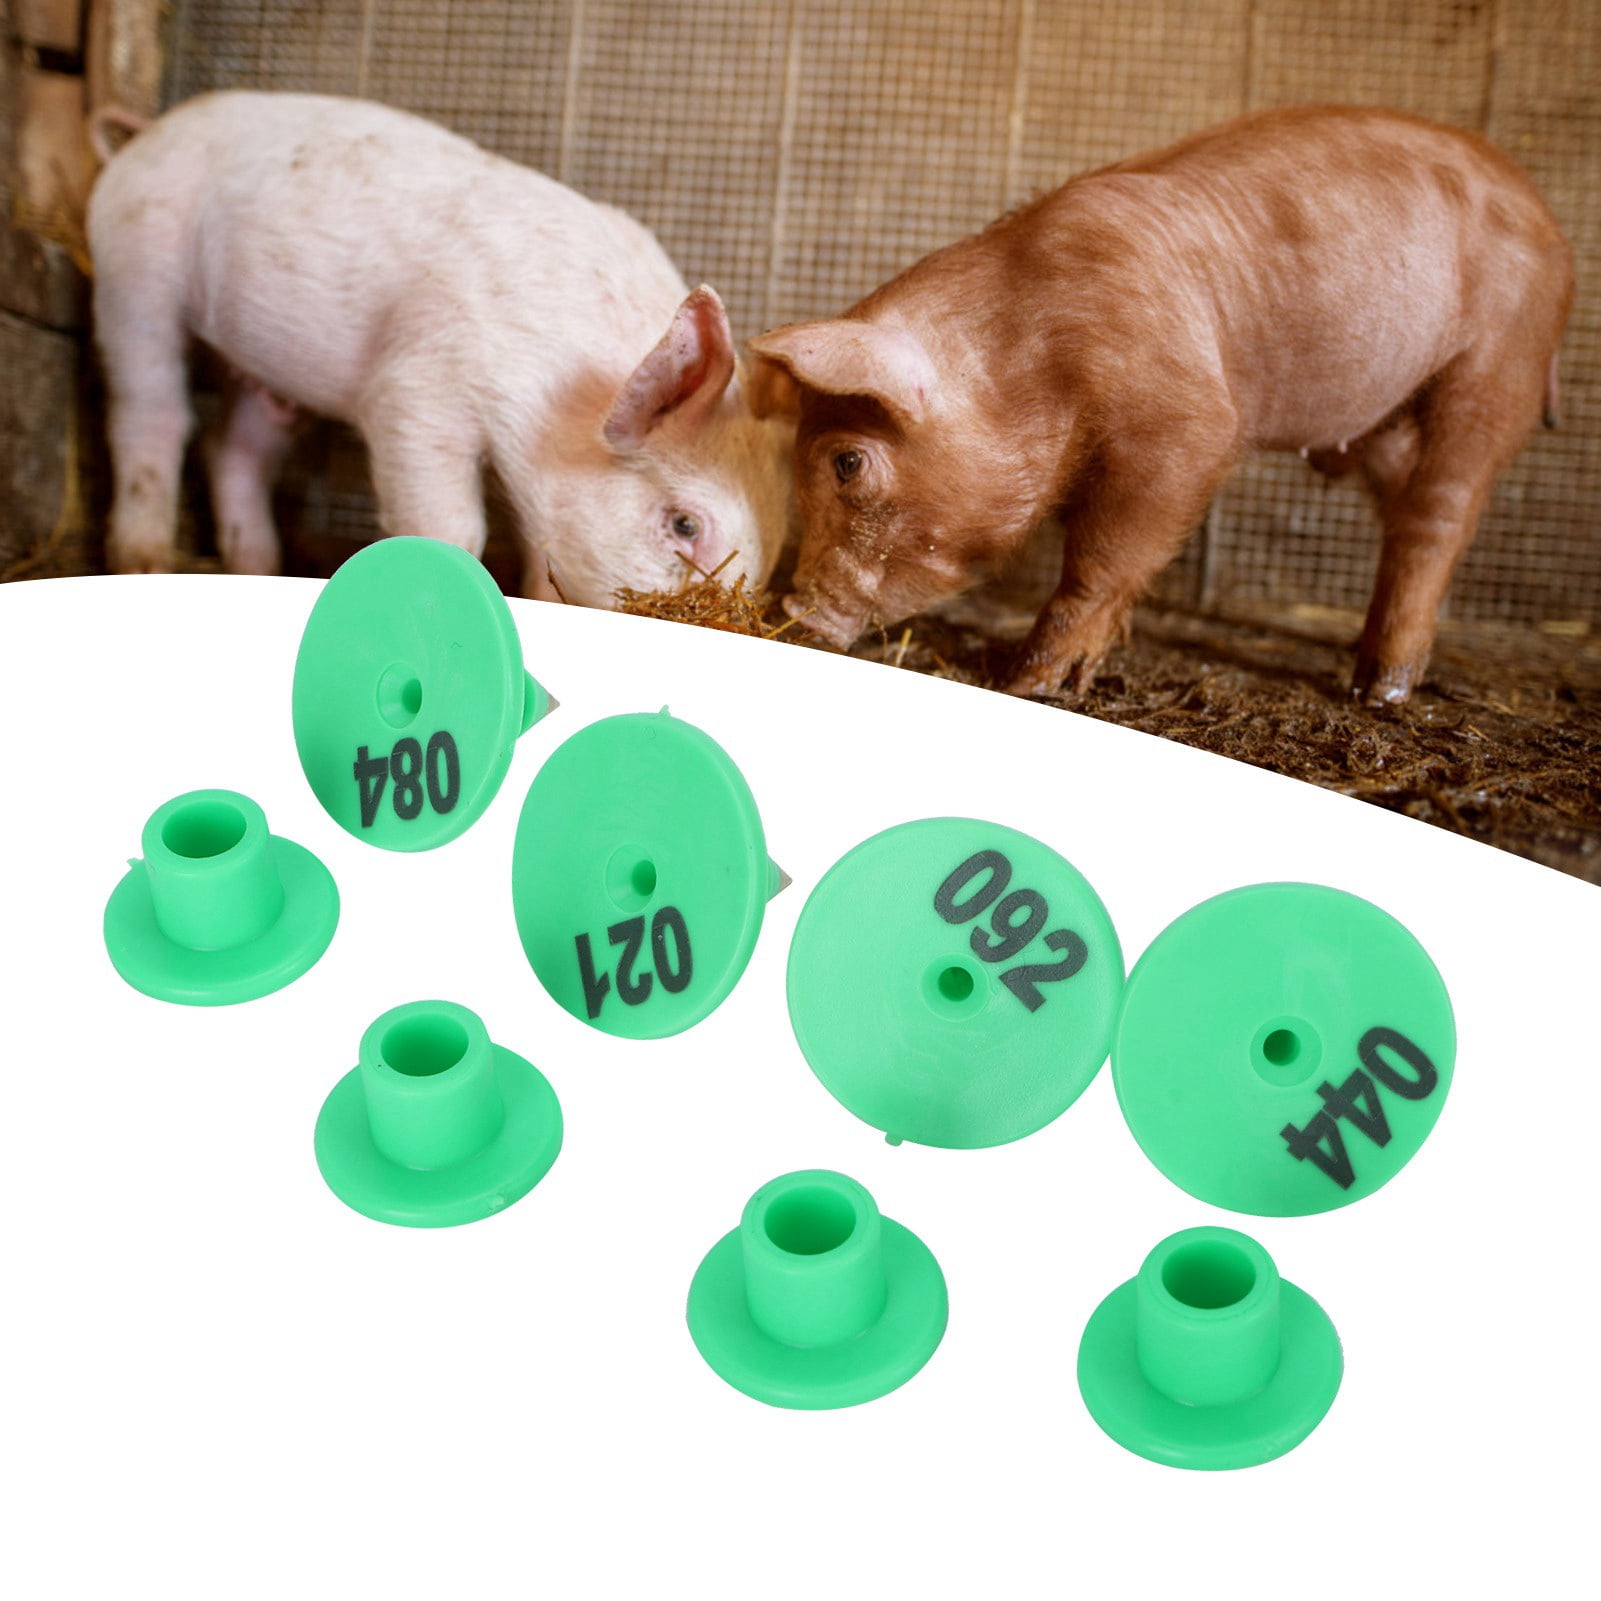 Cattle Pig Ear Tag Livestock Marker label 001-100 Number Plate Green c 